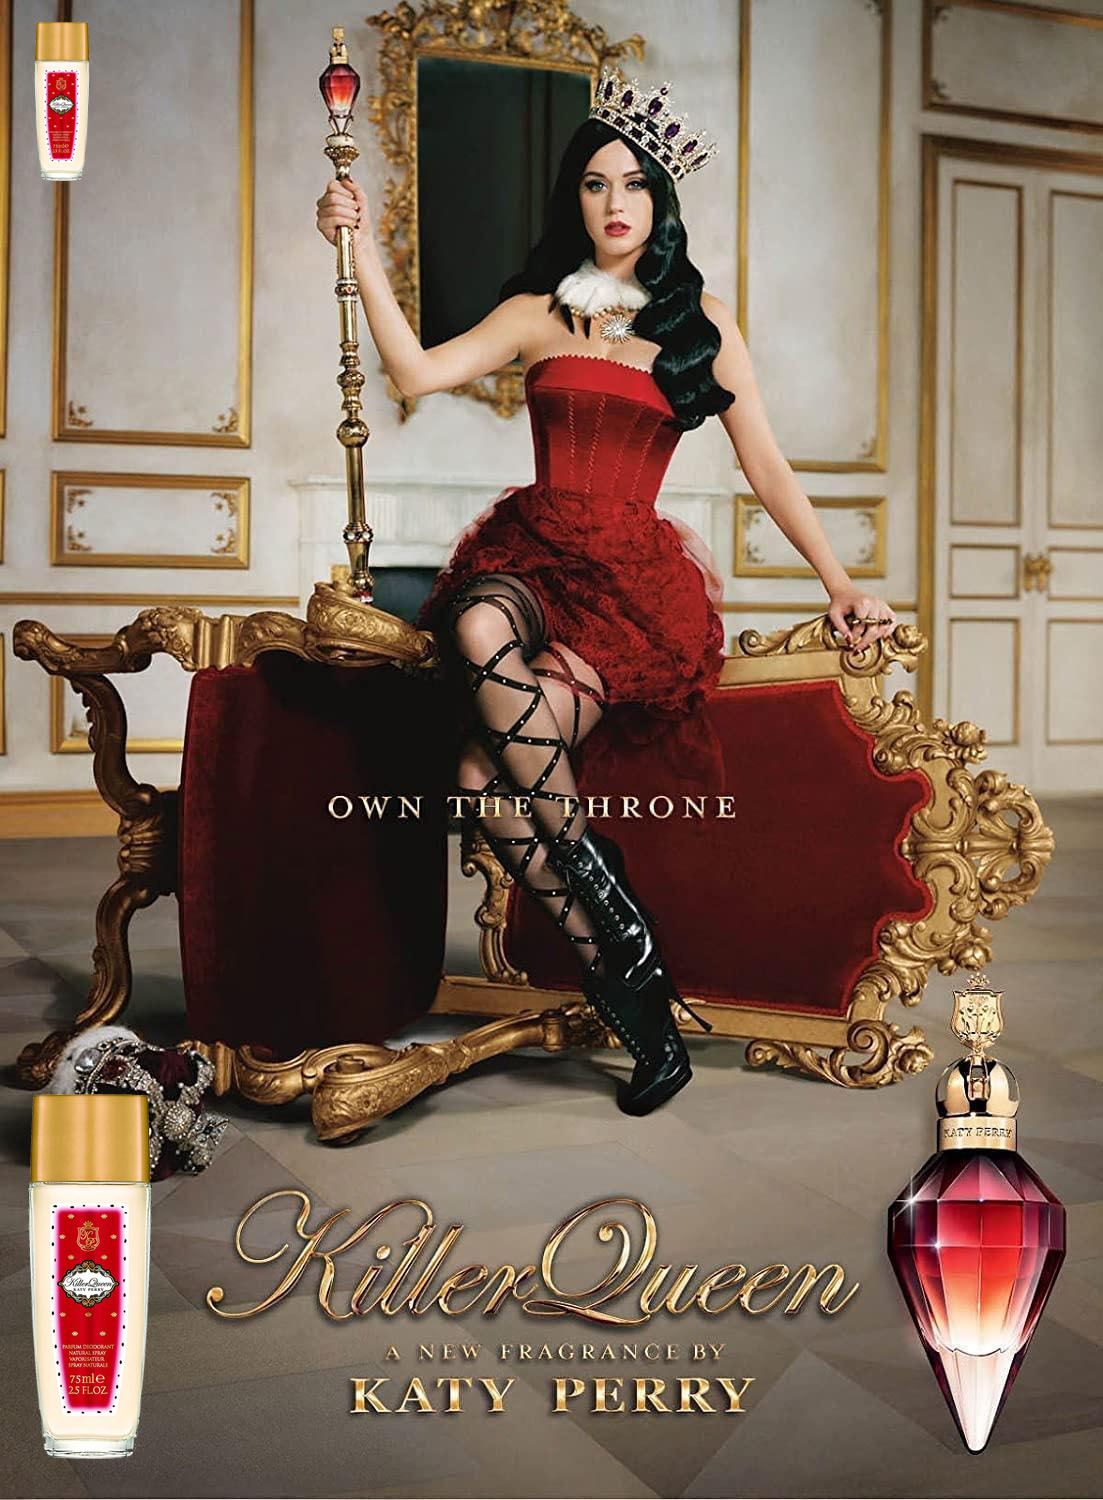 Katy Perry Killer Queen Parfum Deospray 75ml